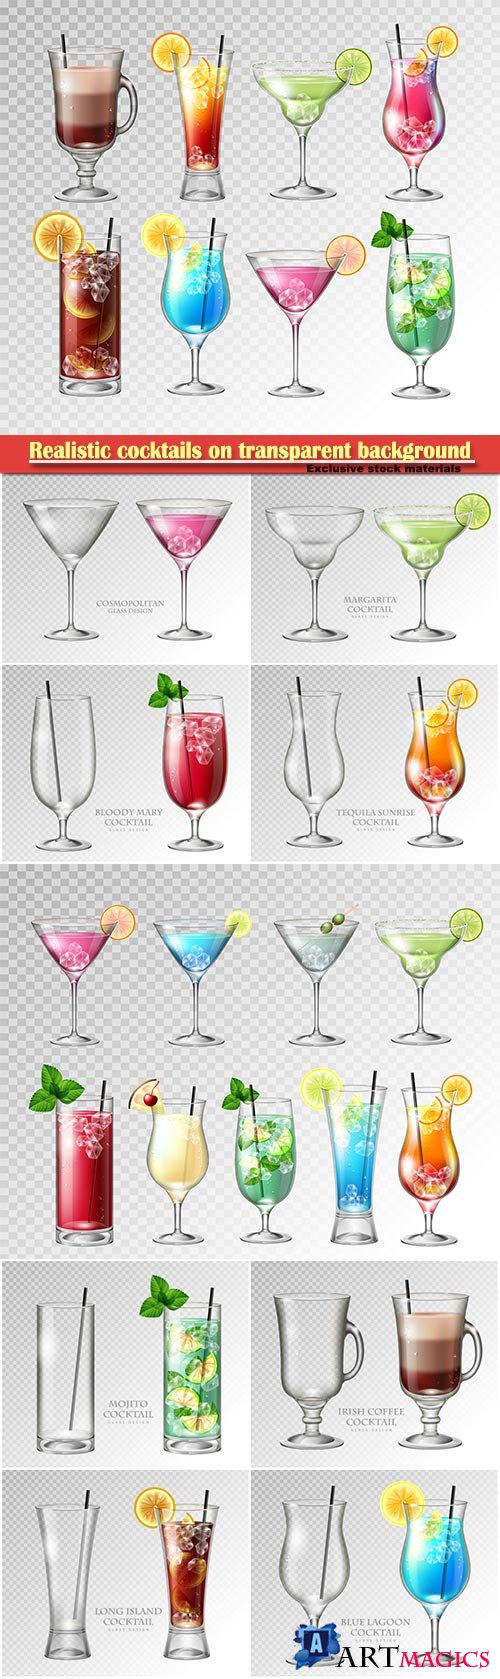 Realistic cocktails on transparent background vector illustration